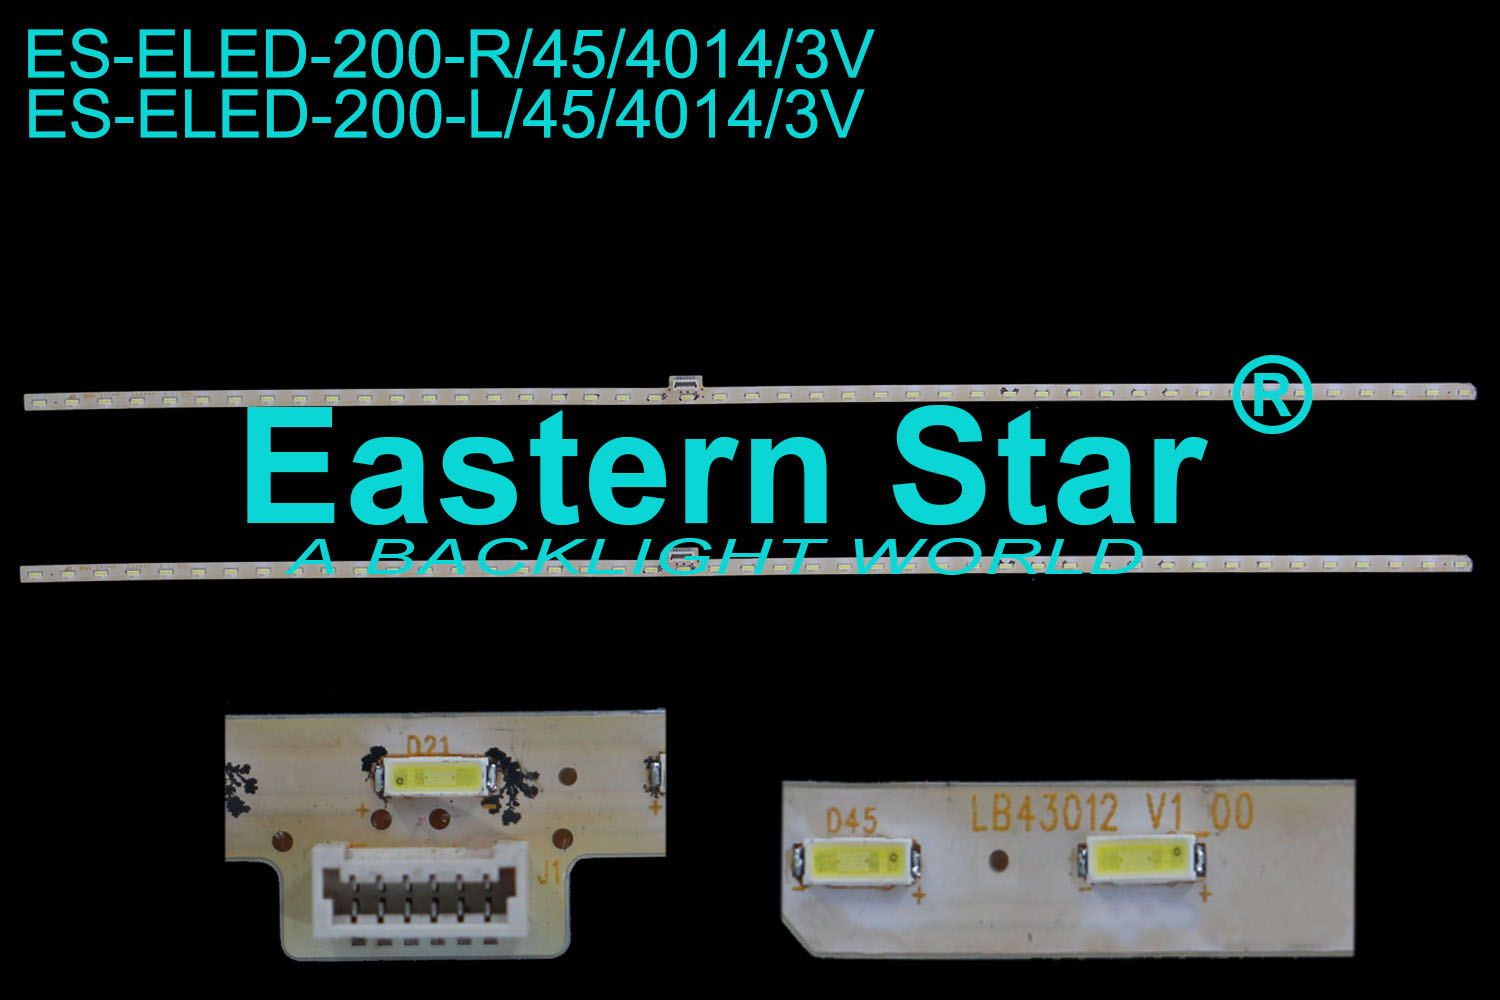 ES-ELED-200 ELED/EDGE TV backlight use for Sony 43'' 45LEDs LB43012 V1/0_00 LED STRIPS(2)